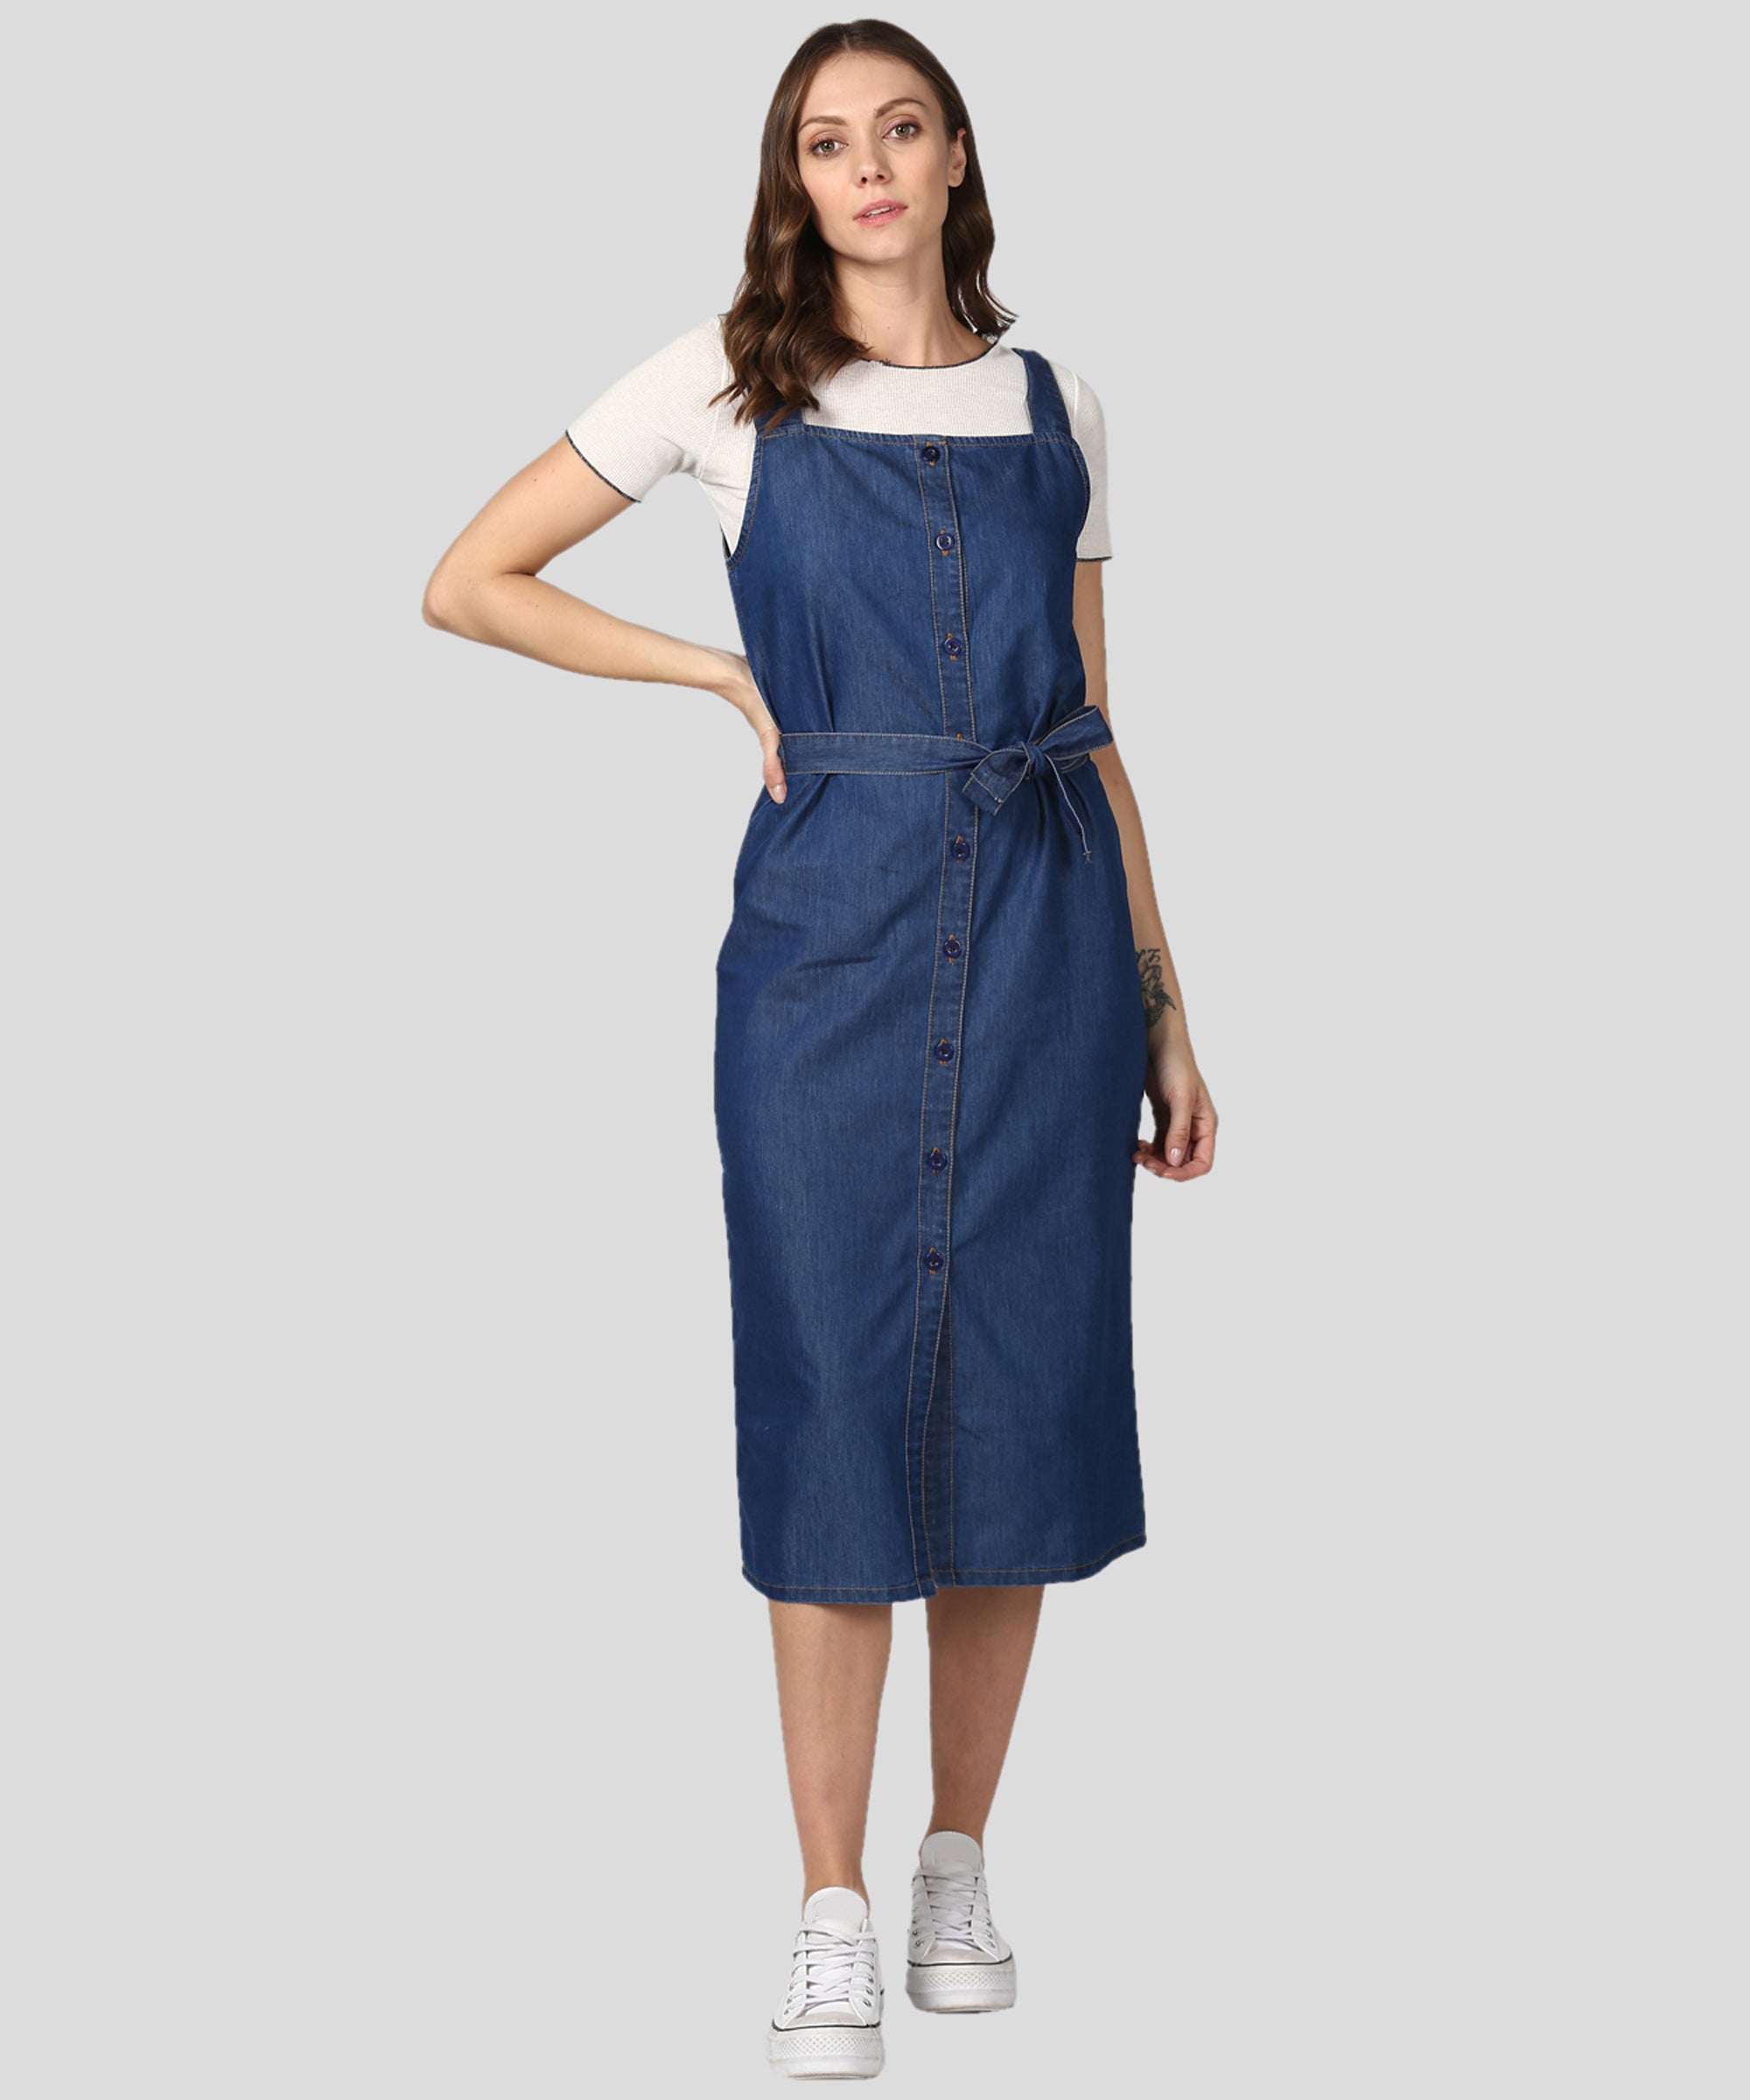 Women's Navy Blue Denim Dress with Straps (inner not included) - StyleStone